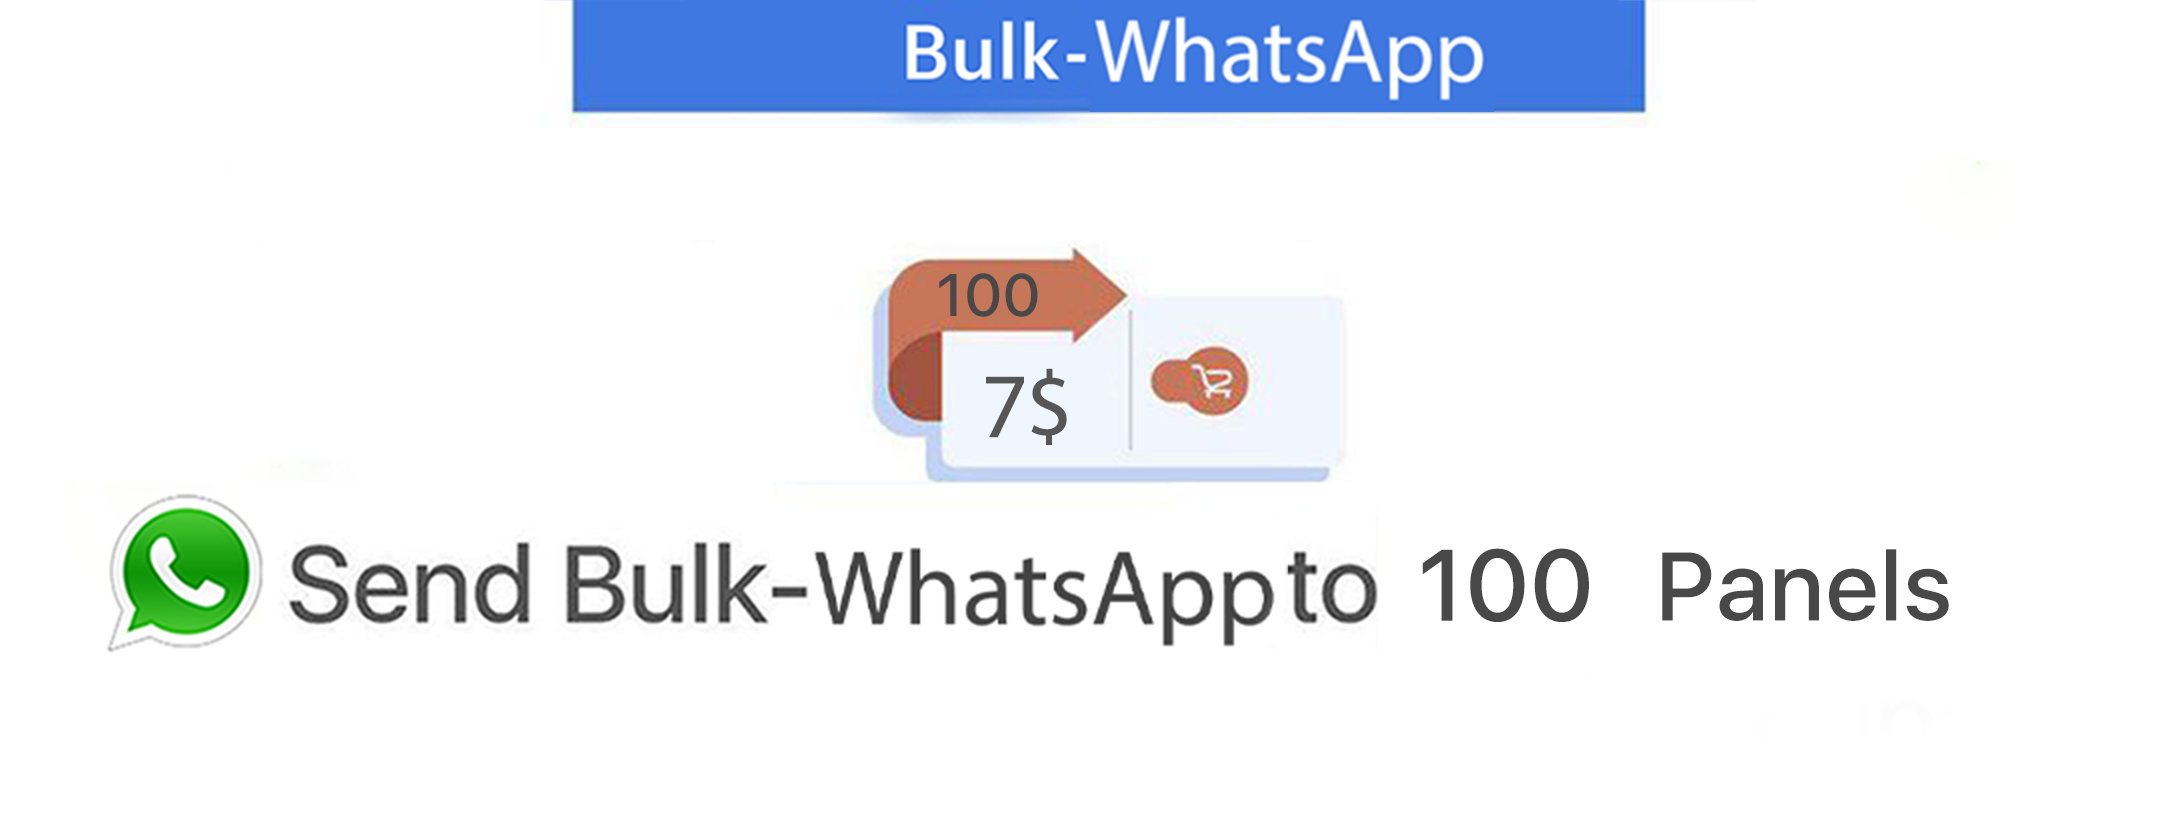 Bulk-Whatsapp - 100 Panels